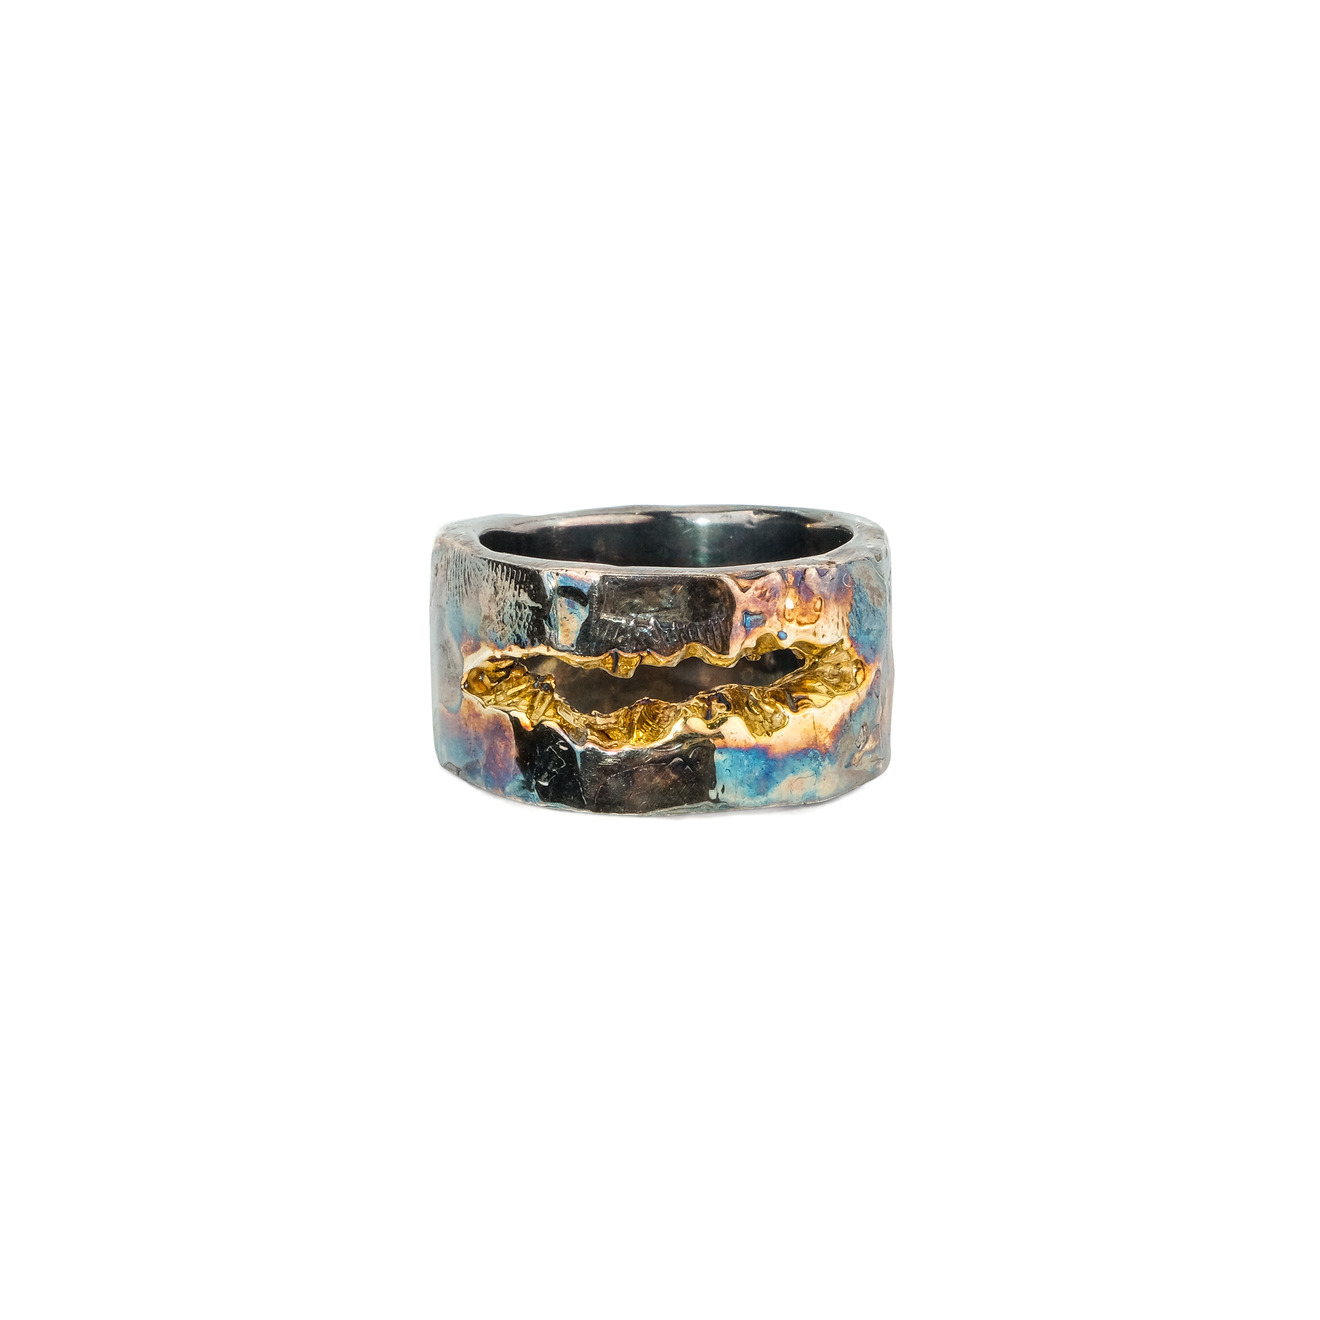 Kintsugi Jewelry Кольцо Forgiveness из серебра с позолотой